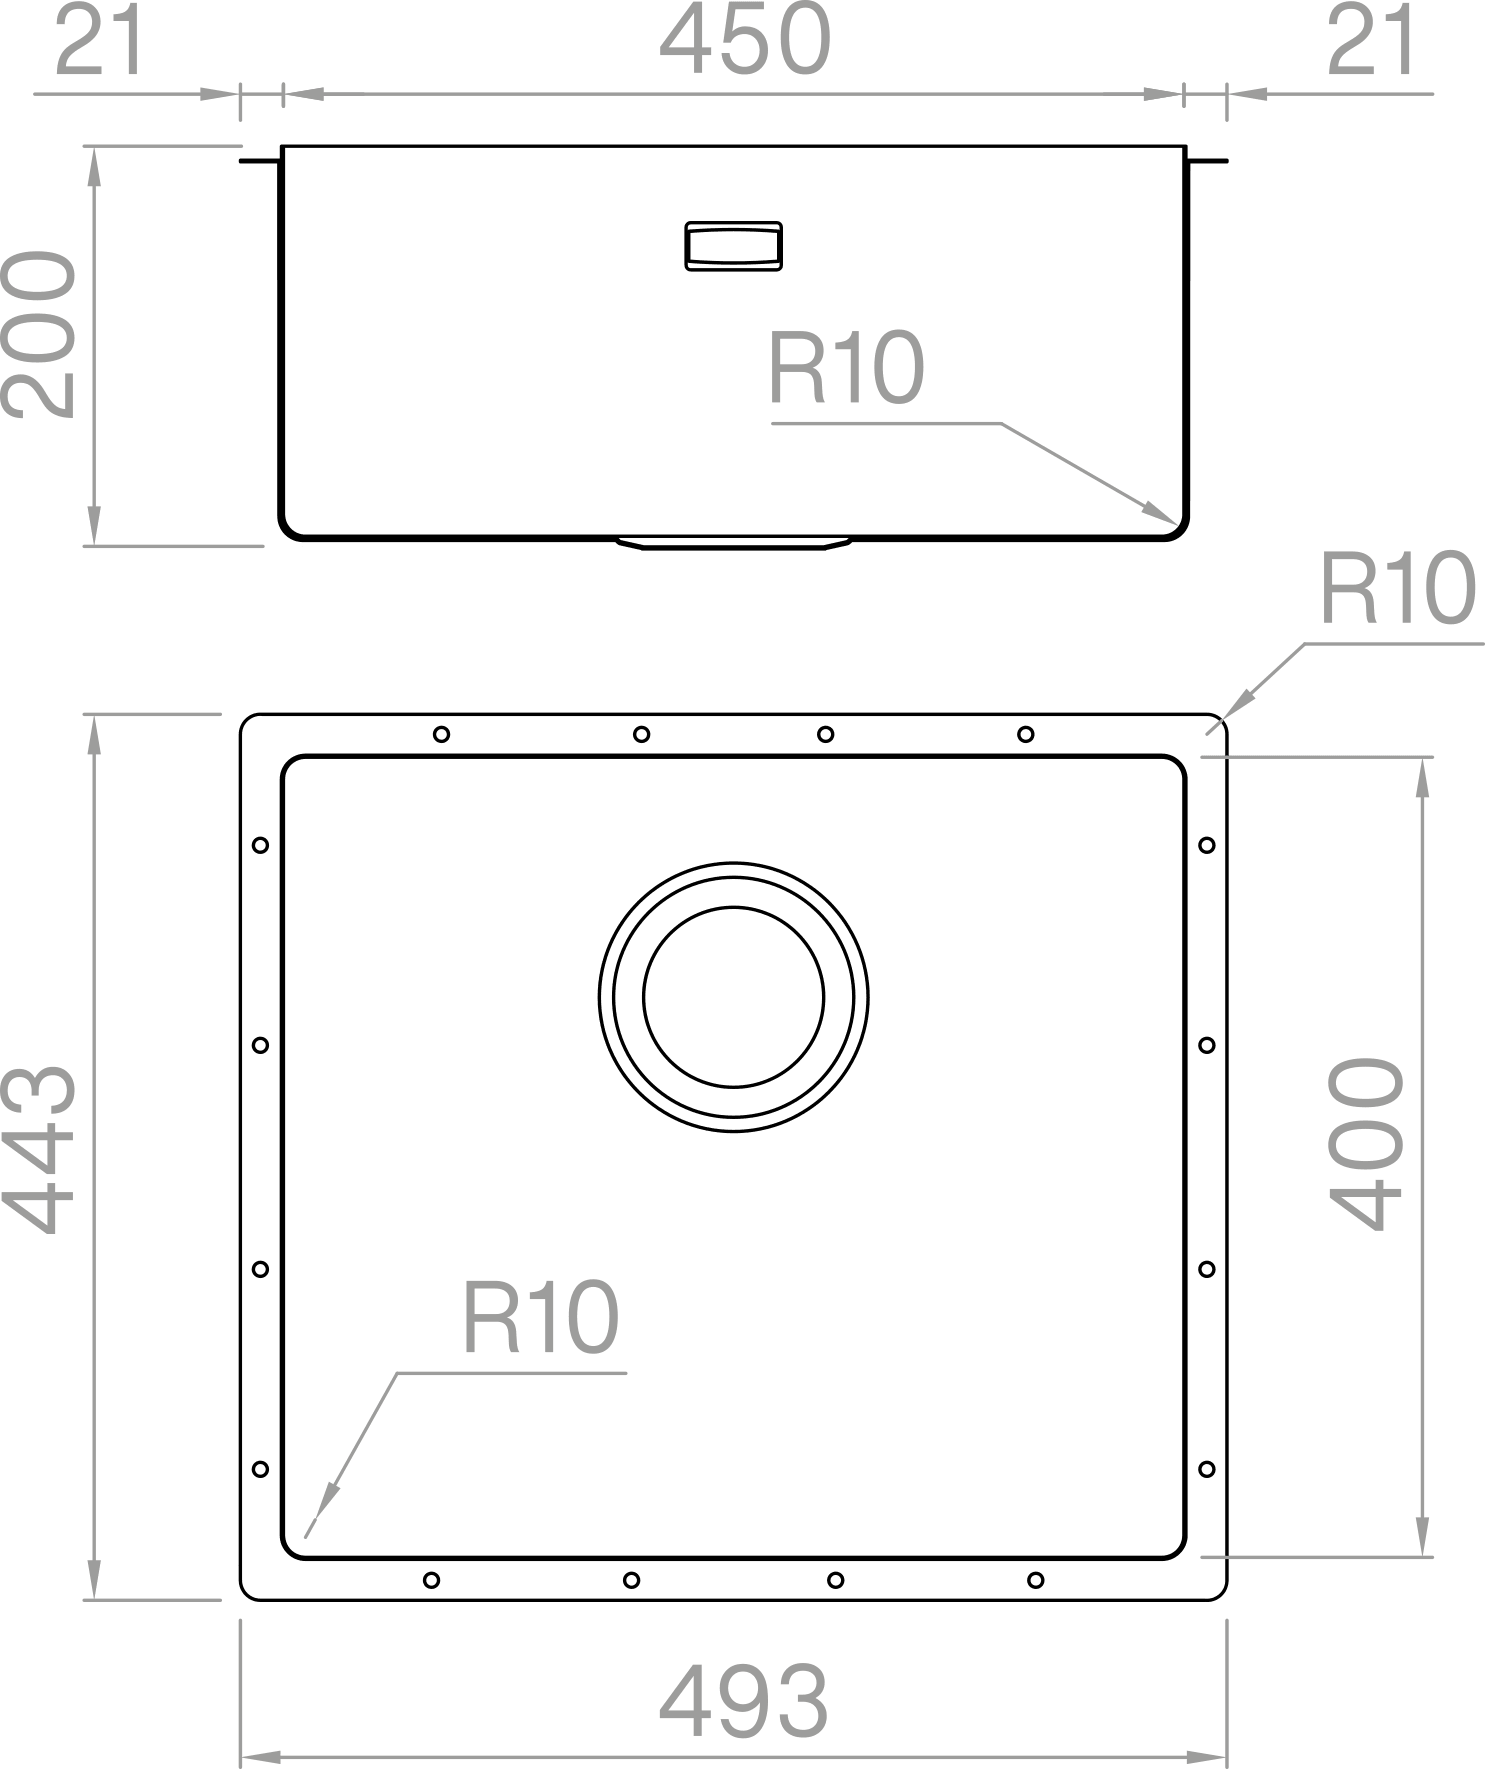 Artinox Linea 45 Zero-Edge kitchen sink - Olif